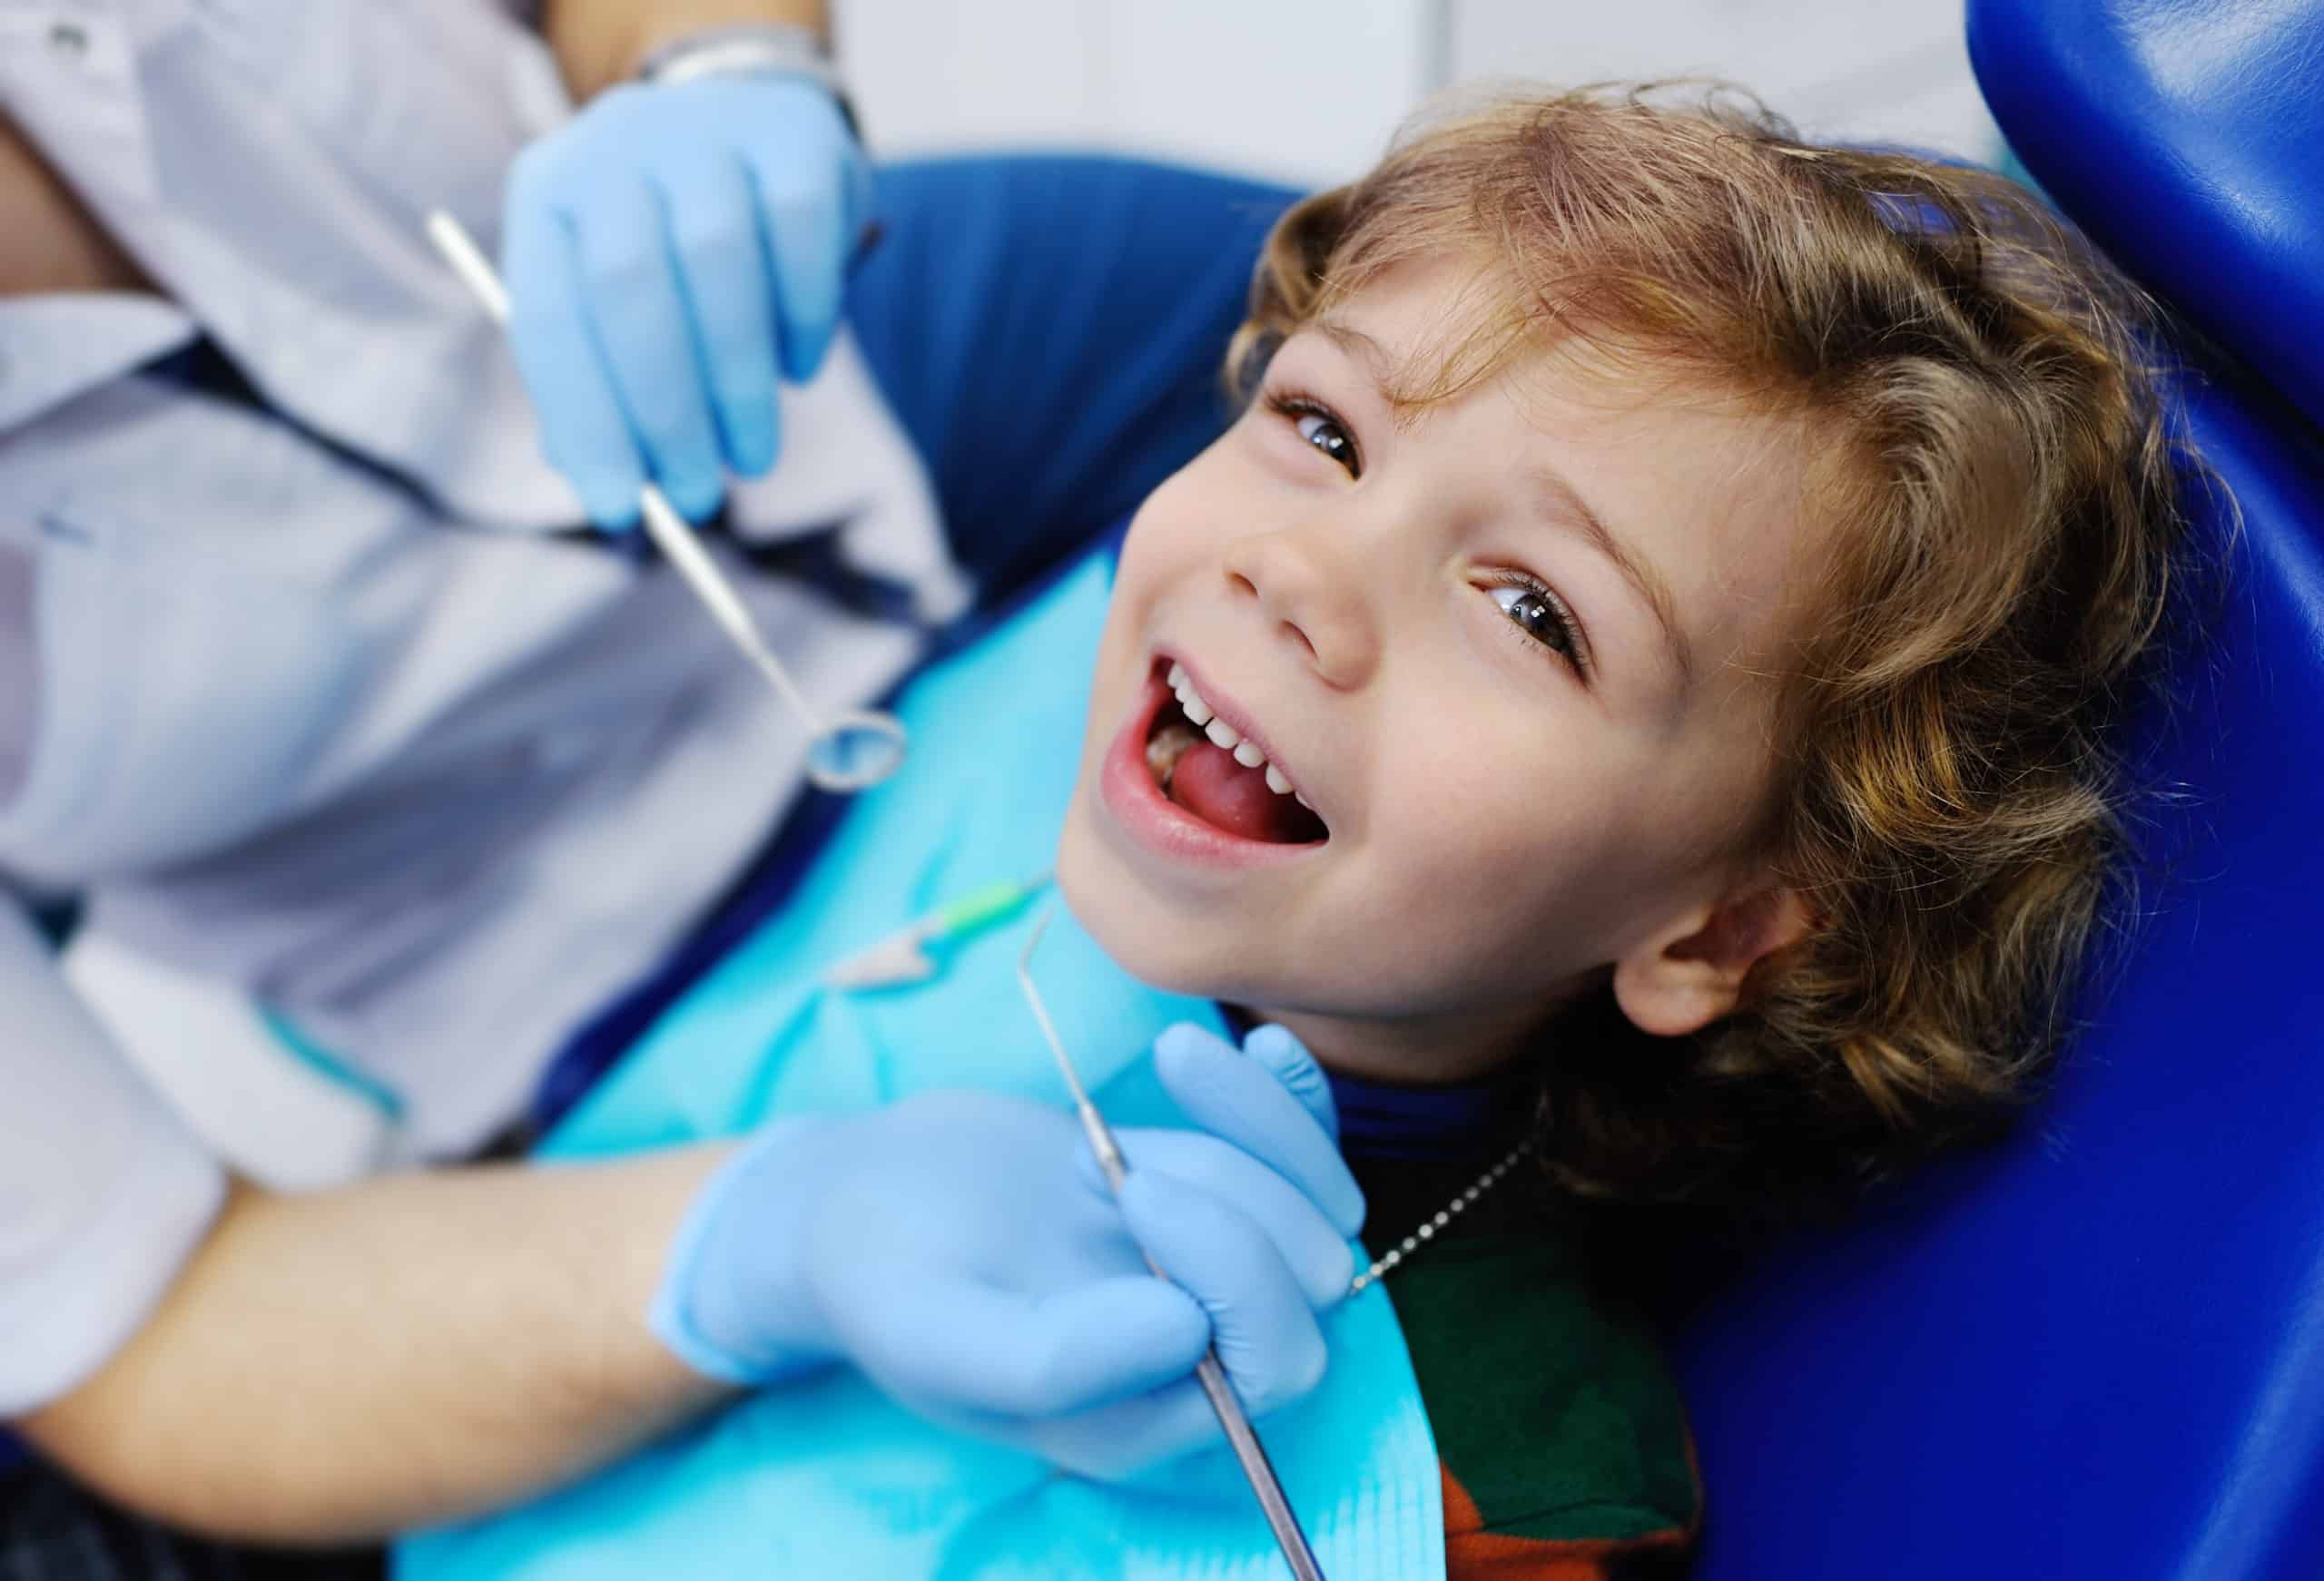 Children’s & Family Dentist in Chicago, Evanston, & Skokie